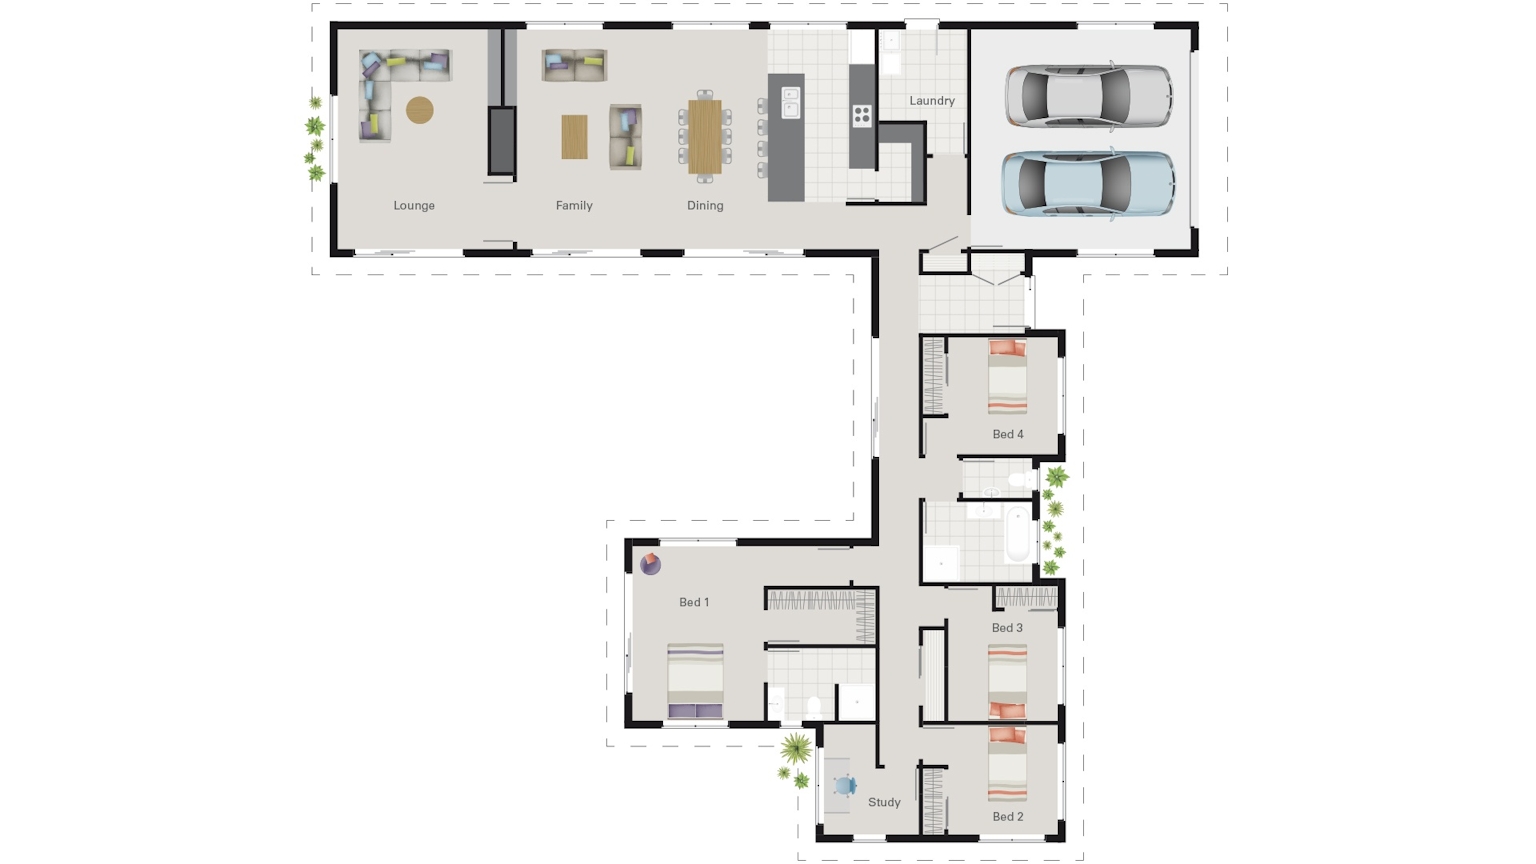 Lot 9 Rural Living floor plan